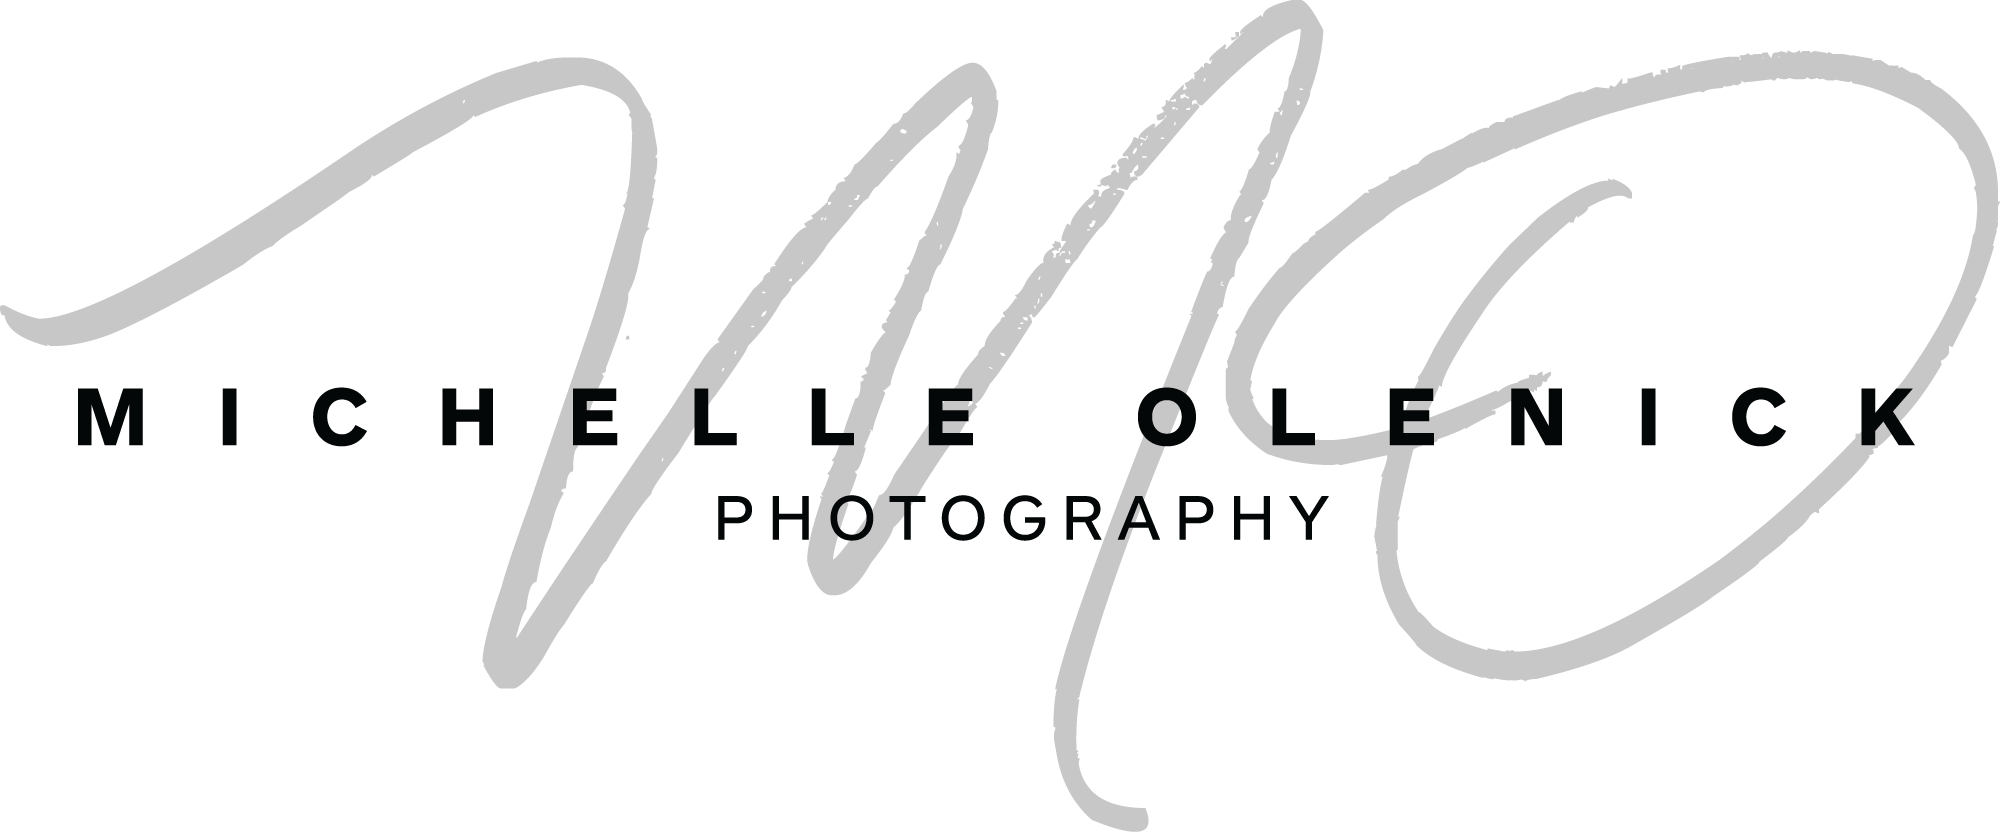 Olenick Logo - Michelle Olenick Photography